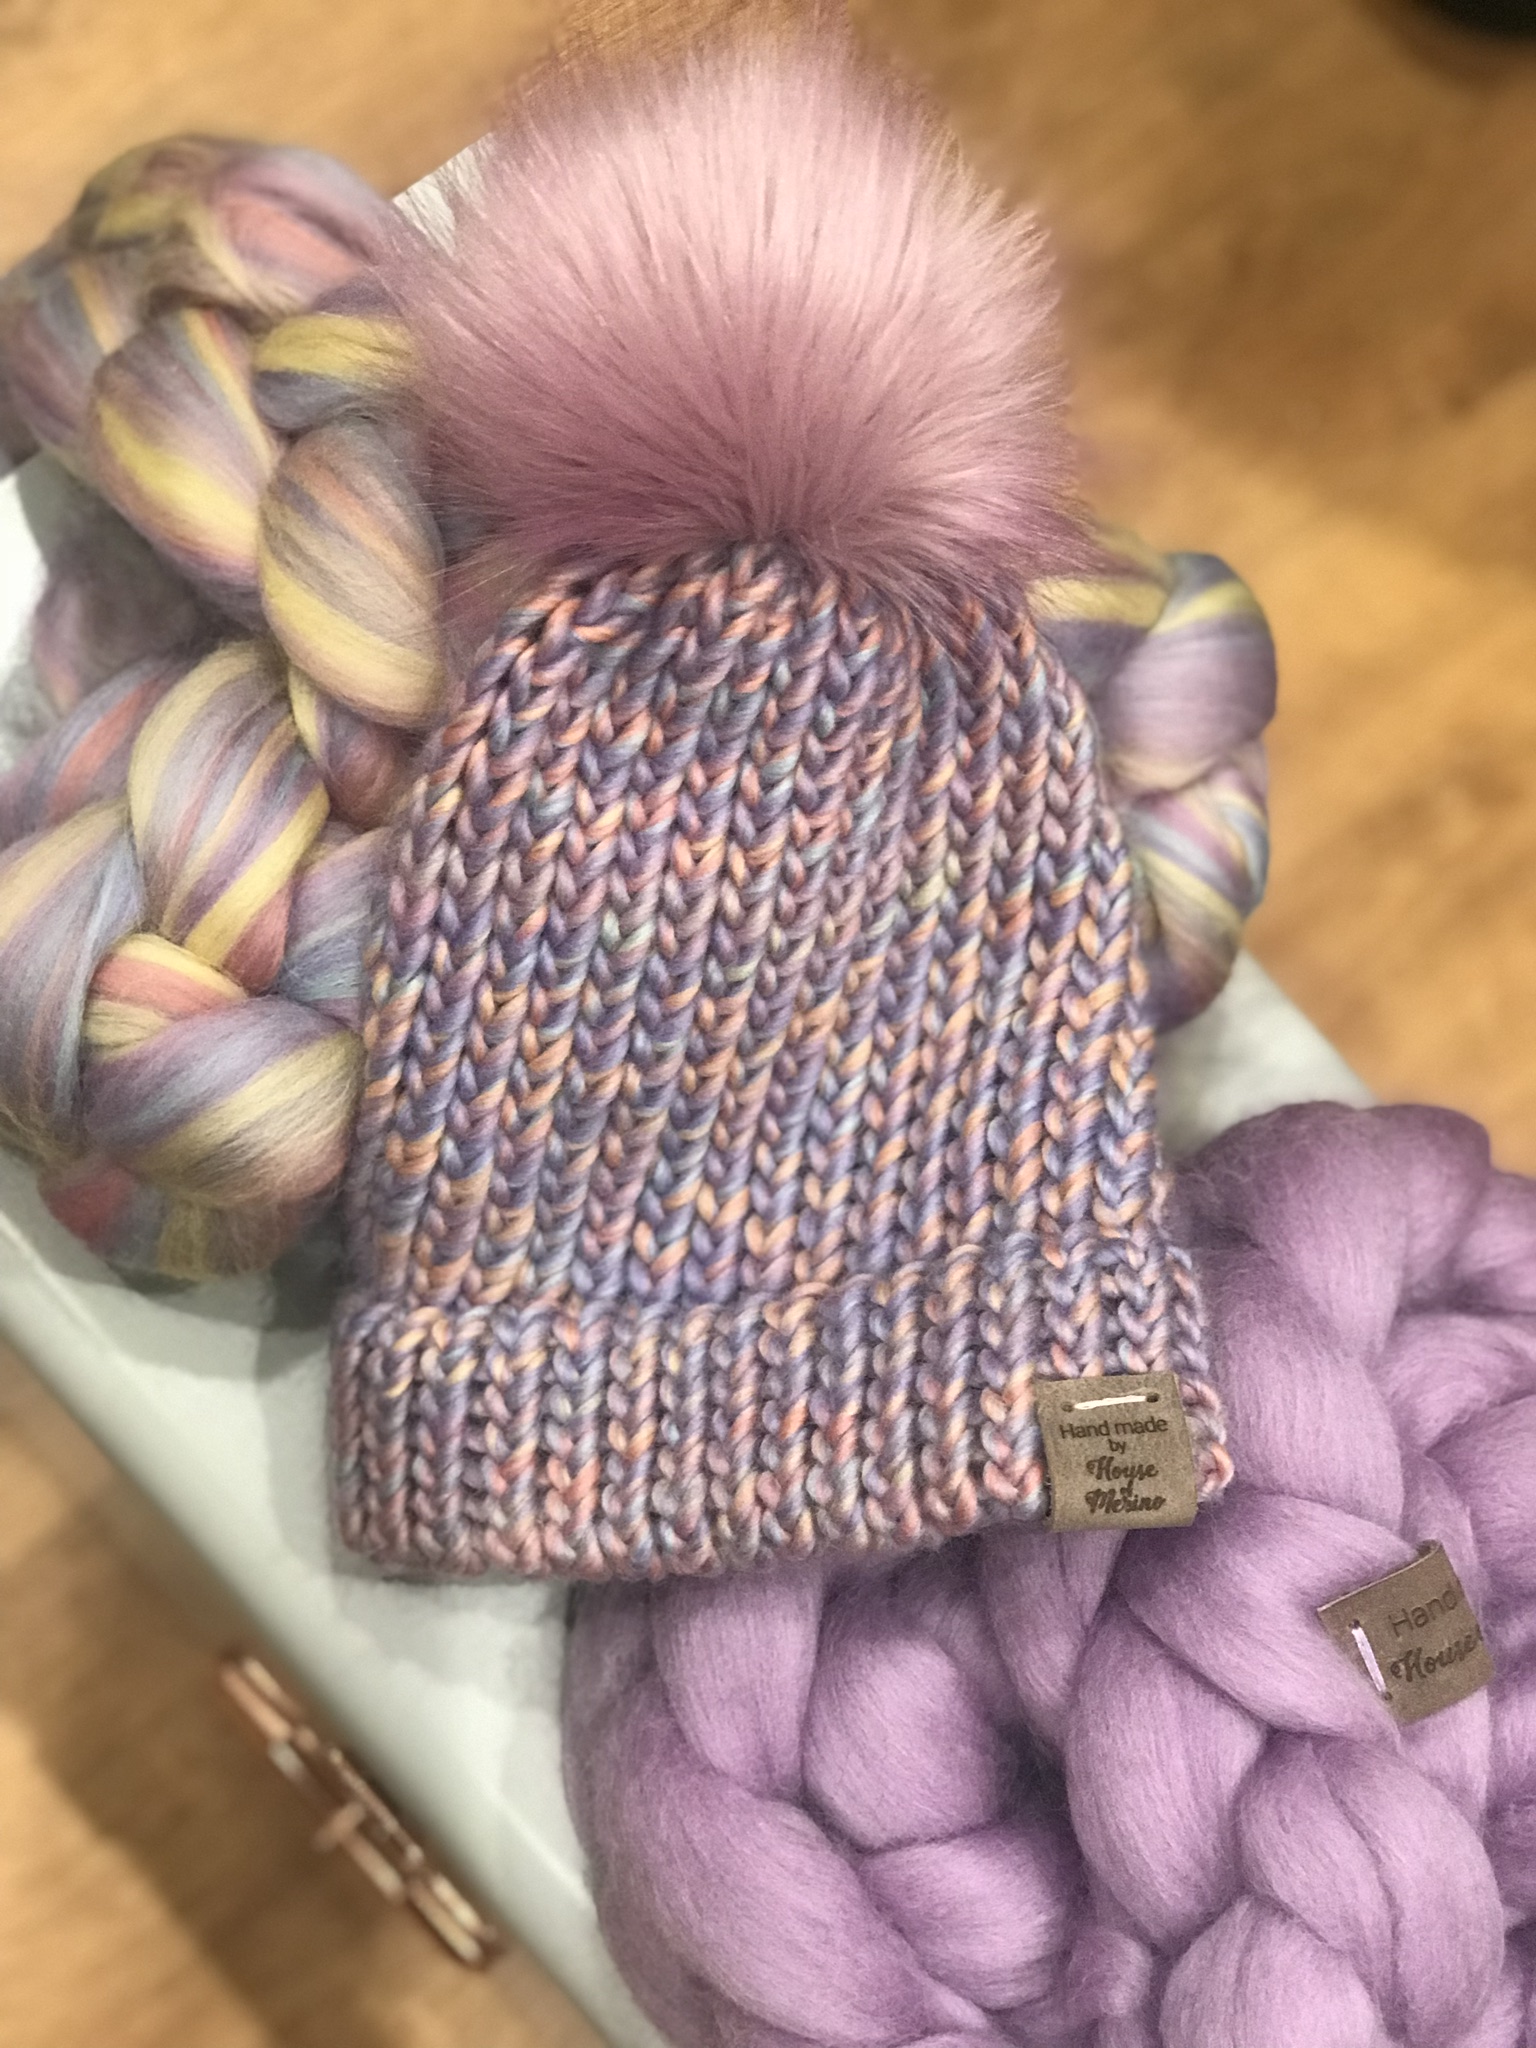 Merino hats - plain knit